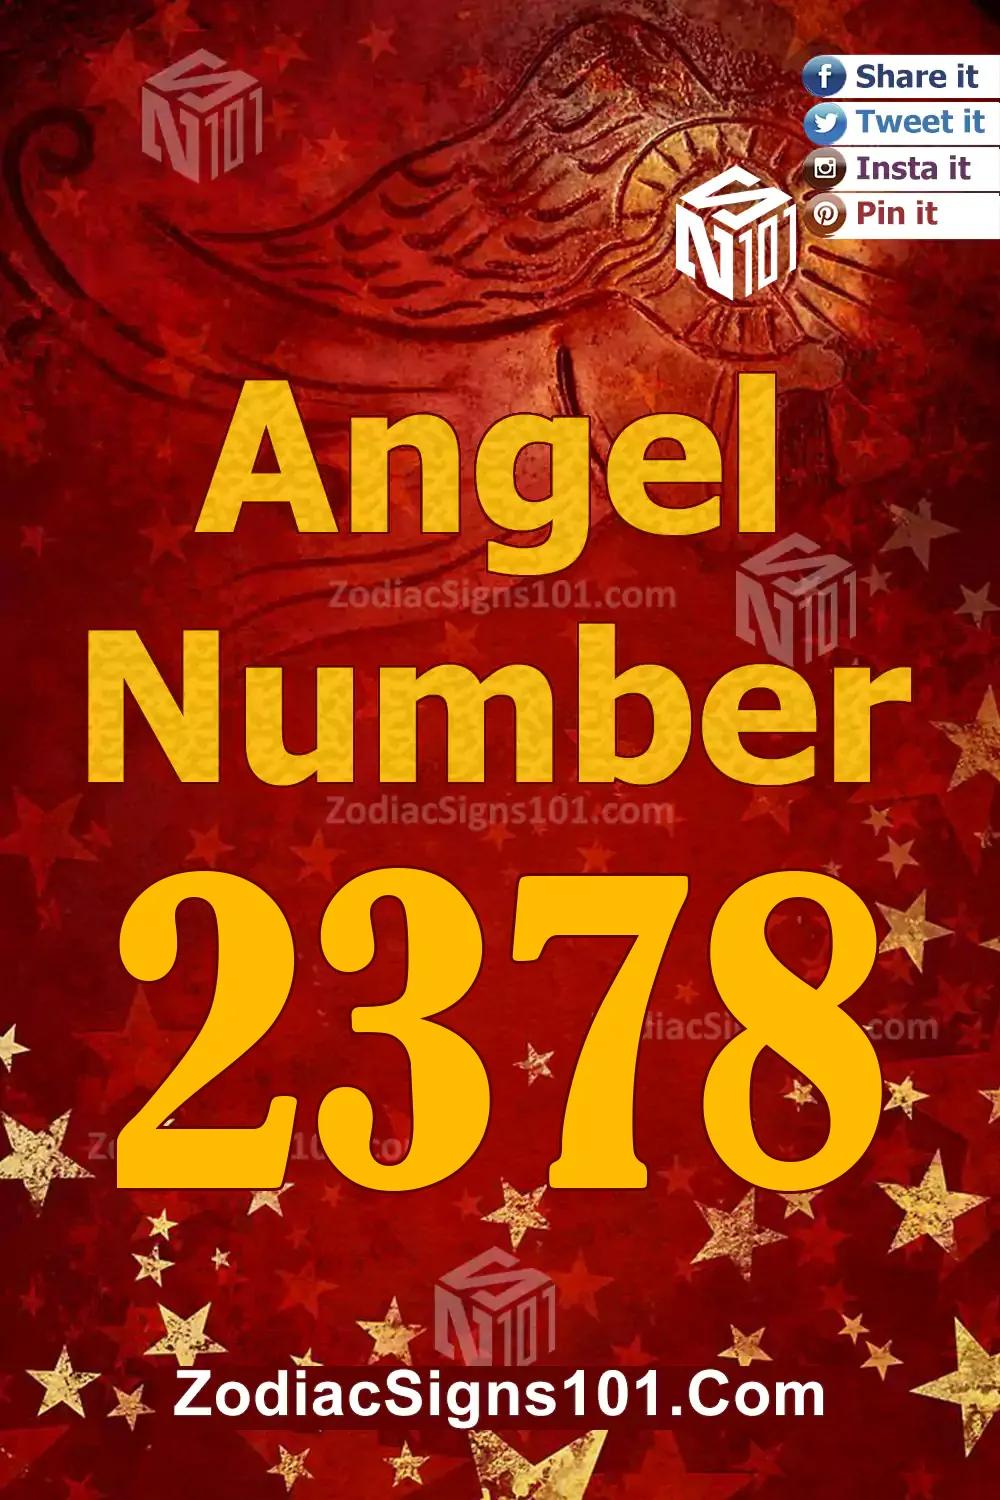 2378-Angel-Number-Meaning.jpg